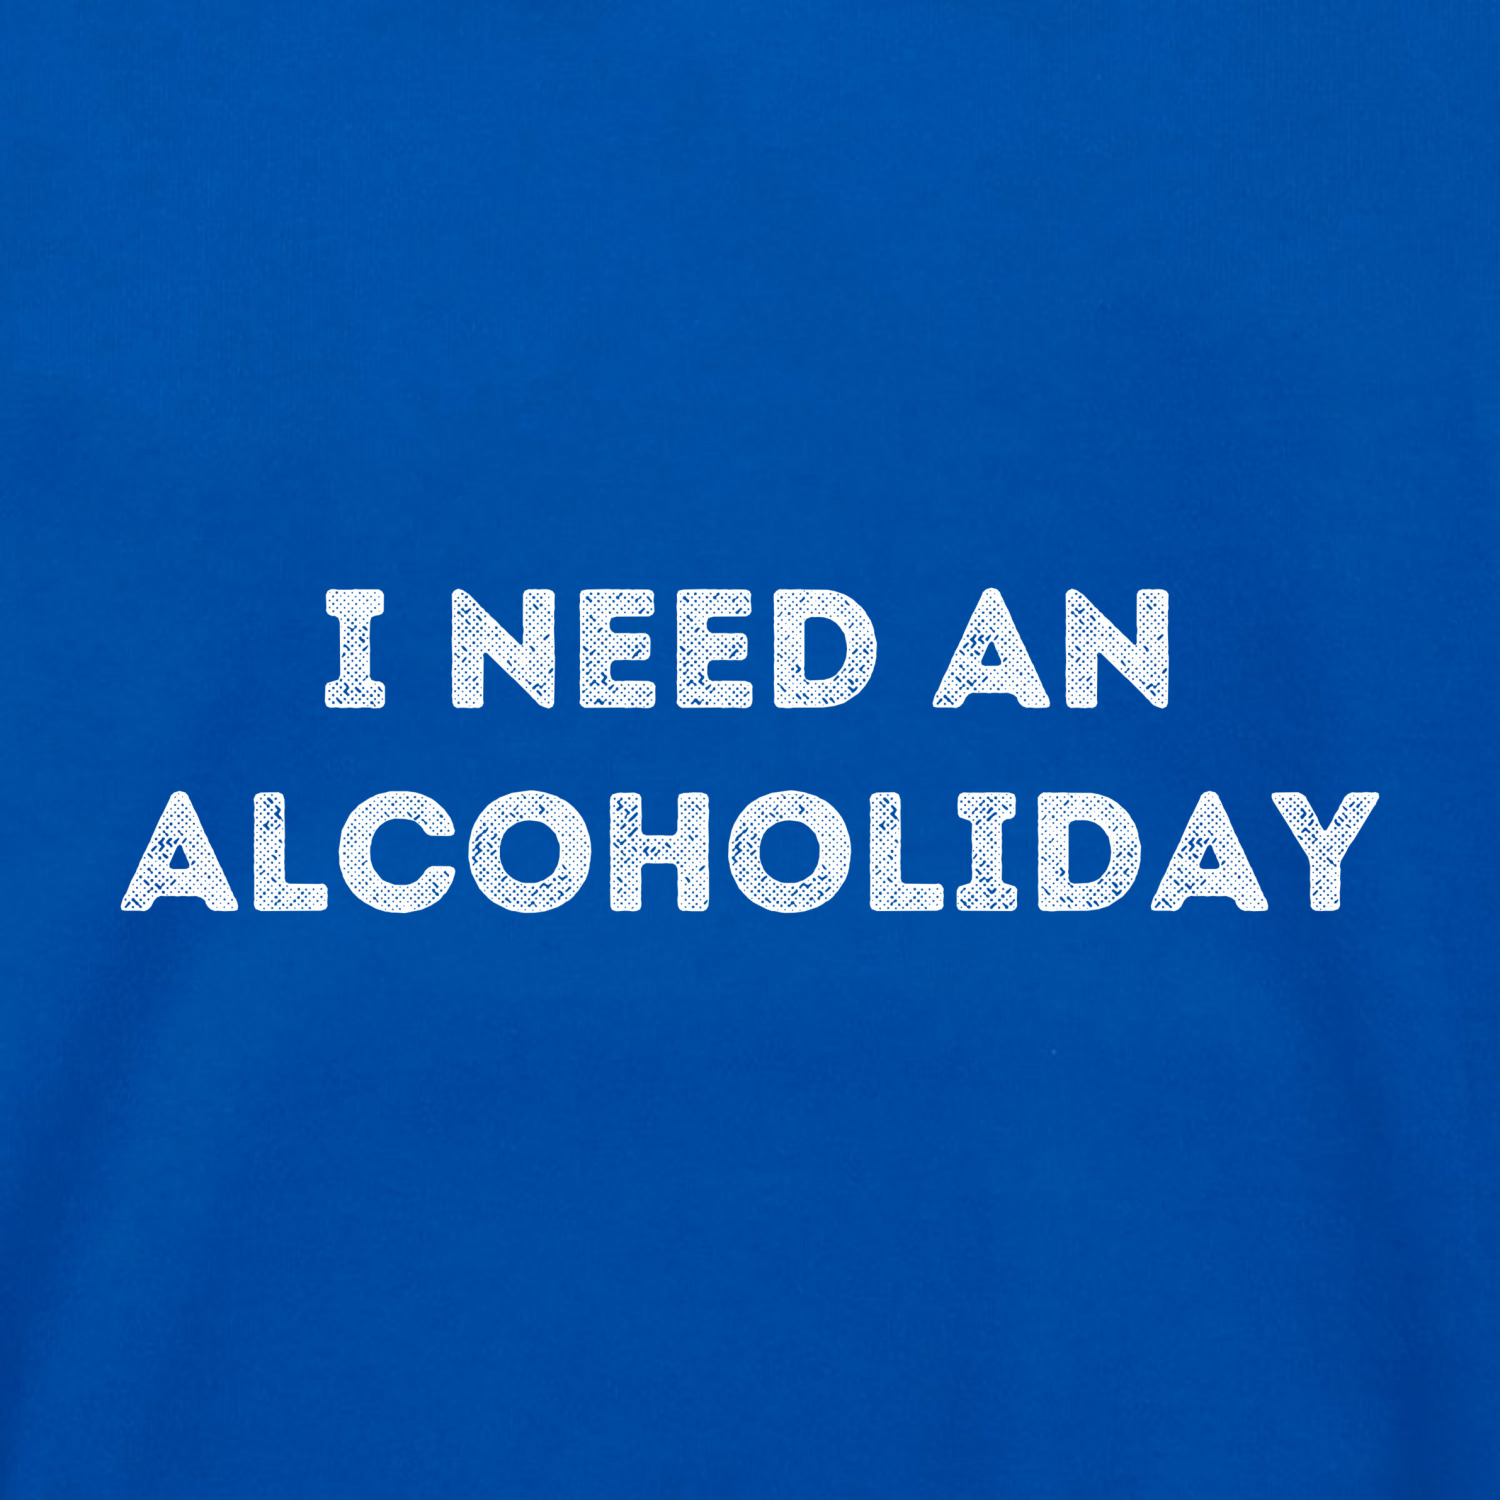 Толстовка унисекс «I need an alcoholiday»